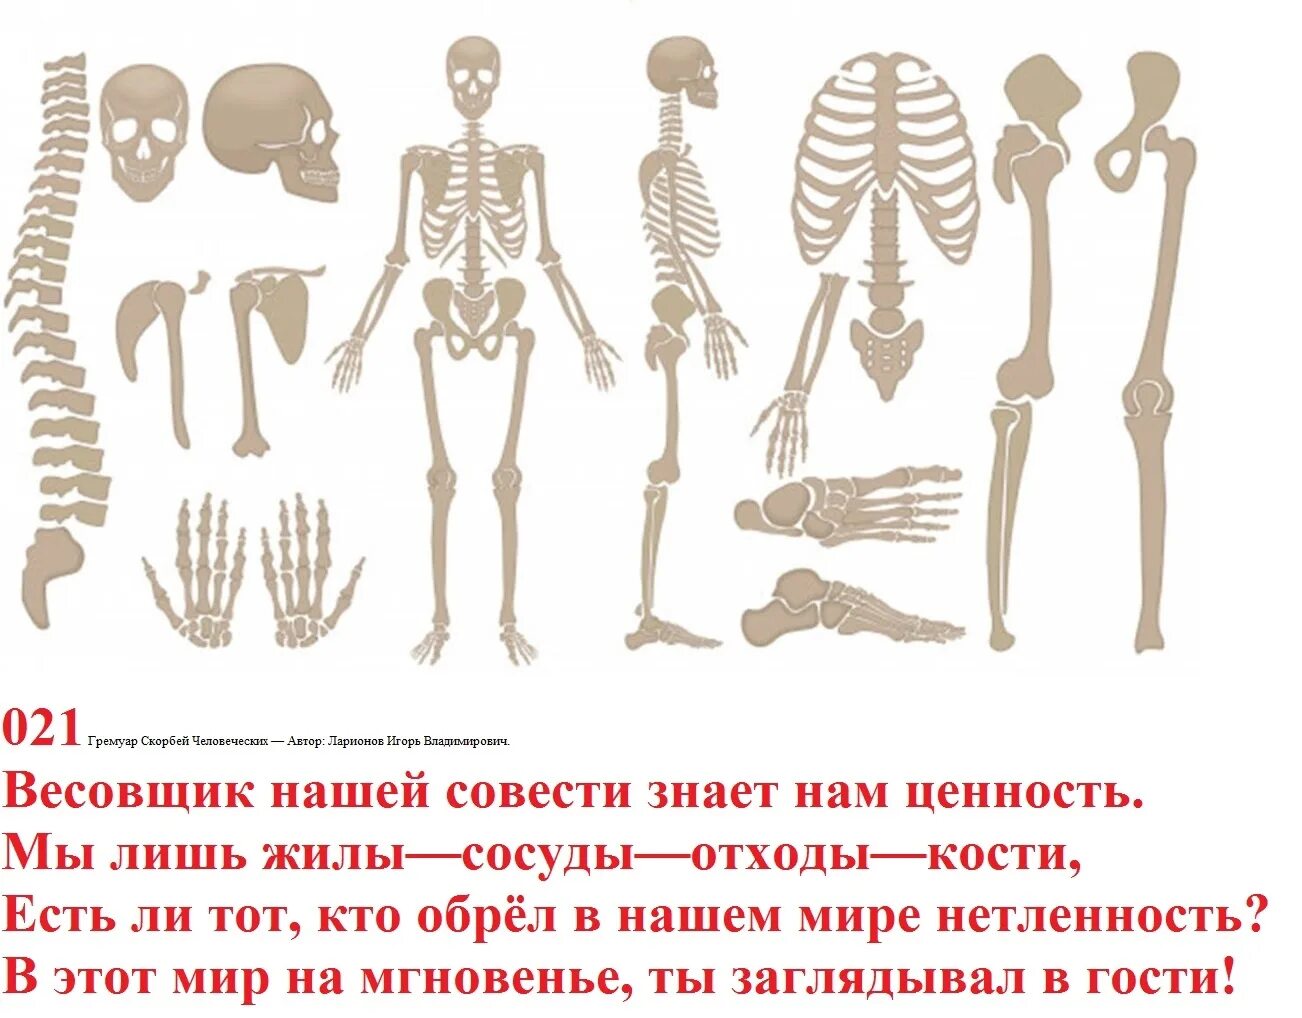 Day bones. Скелет человека. Кости человеческого скелета. Скелет человека анатомия. Отдельные части скелета для детей.